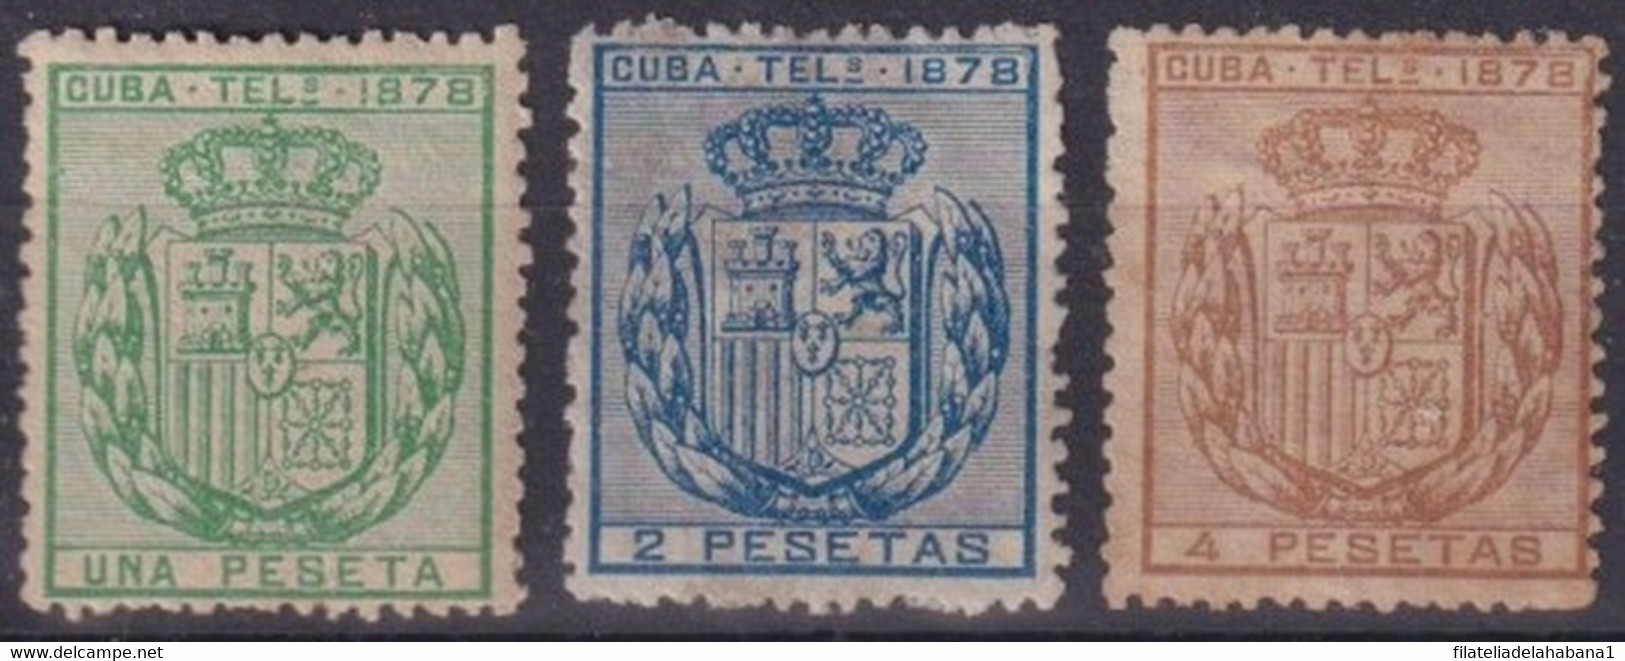 1878-197 CUBA SPAIN ESPAÑA 1878 COMPLETE SET TELEGRAPH TELEGRAFOS UNUSED NO GUM. - Telégrafo